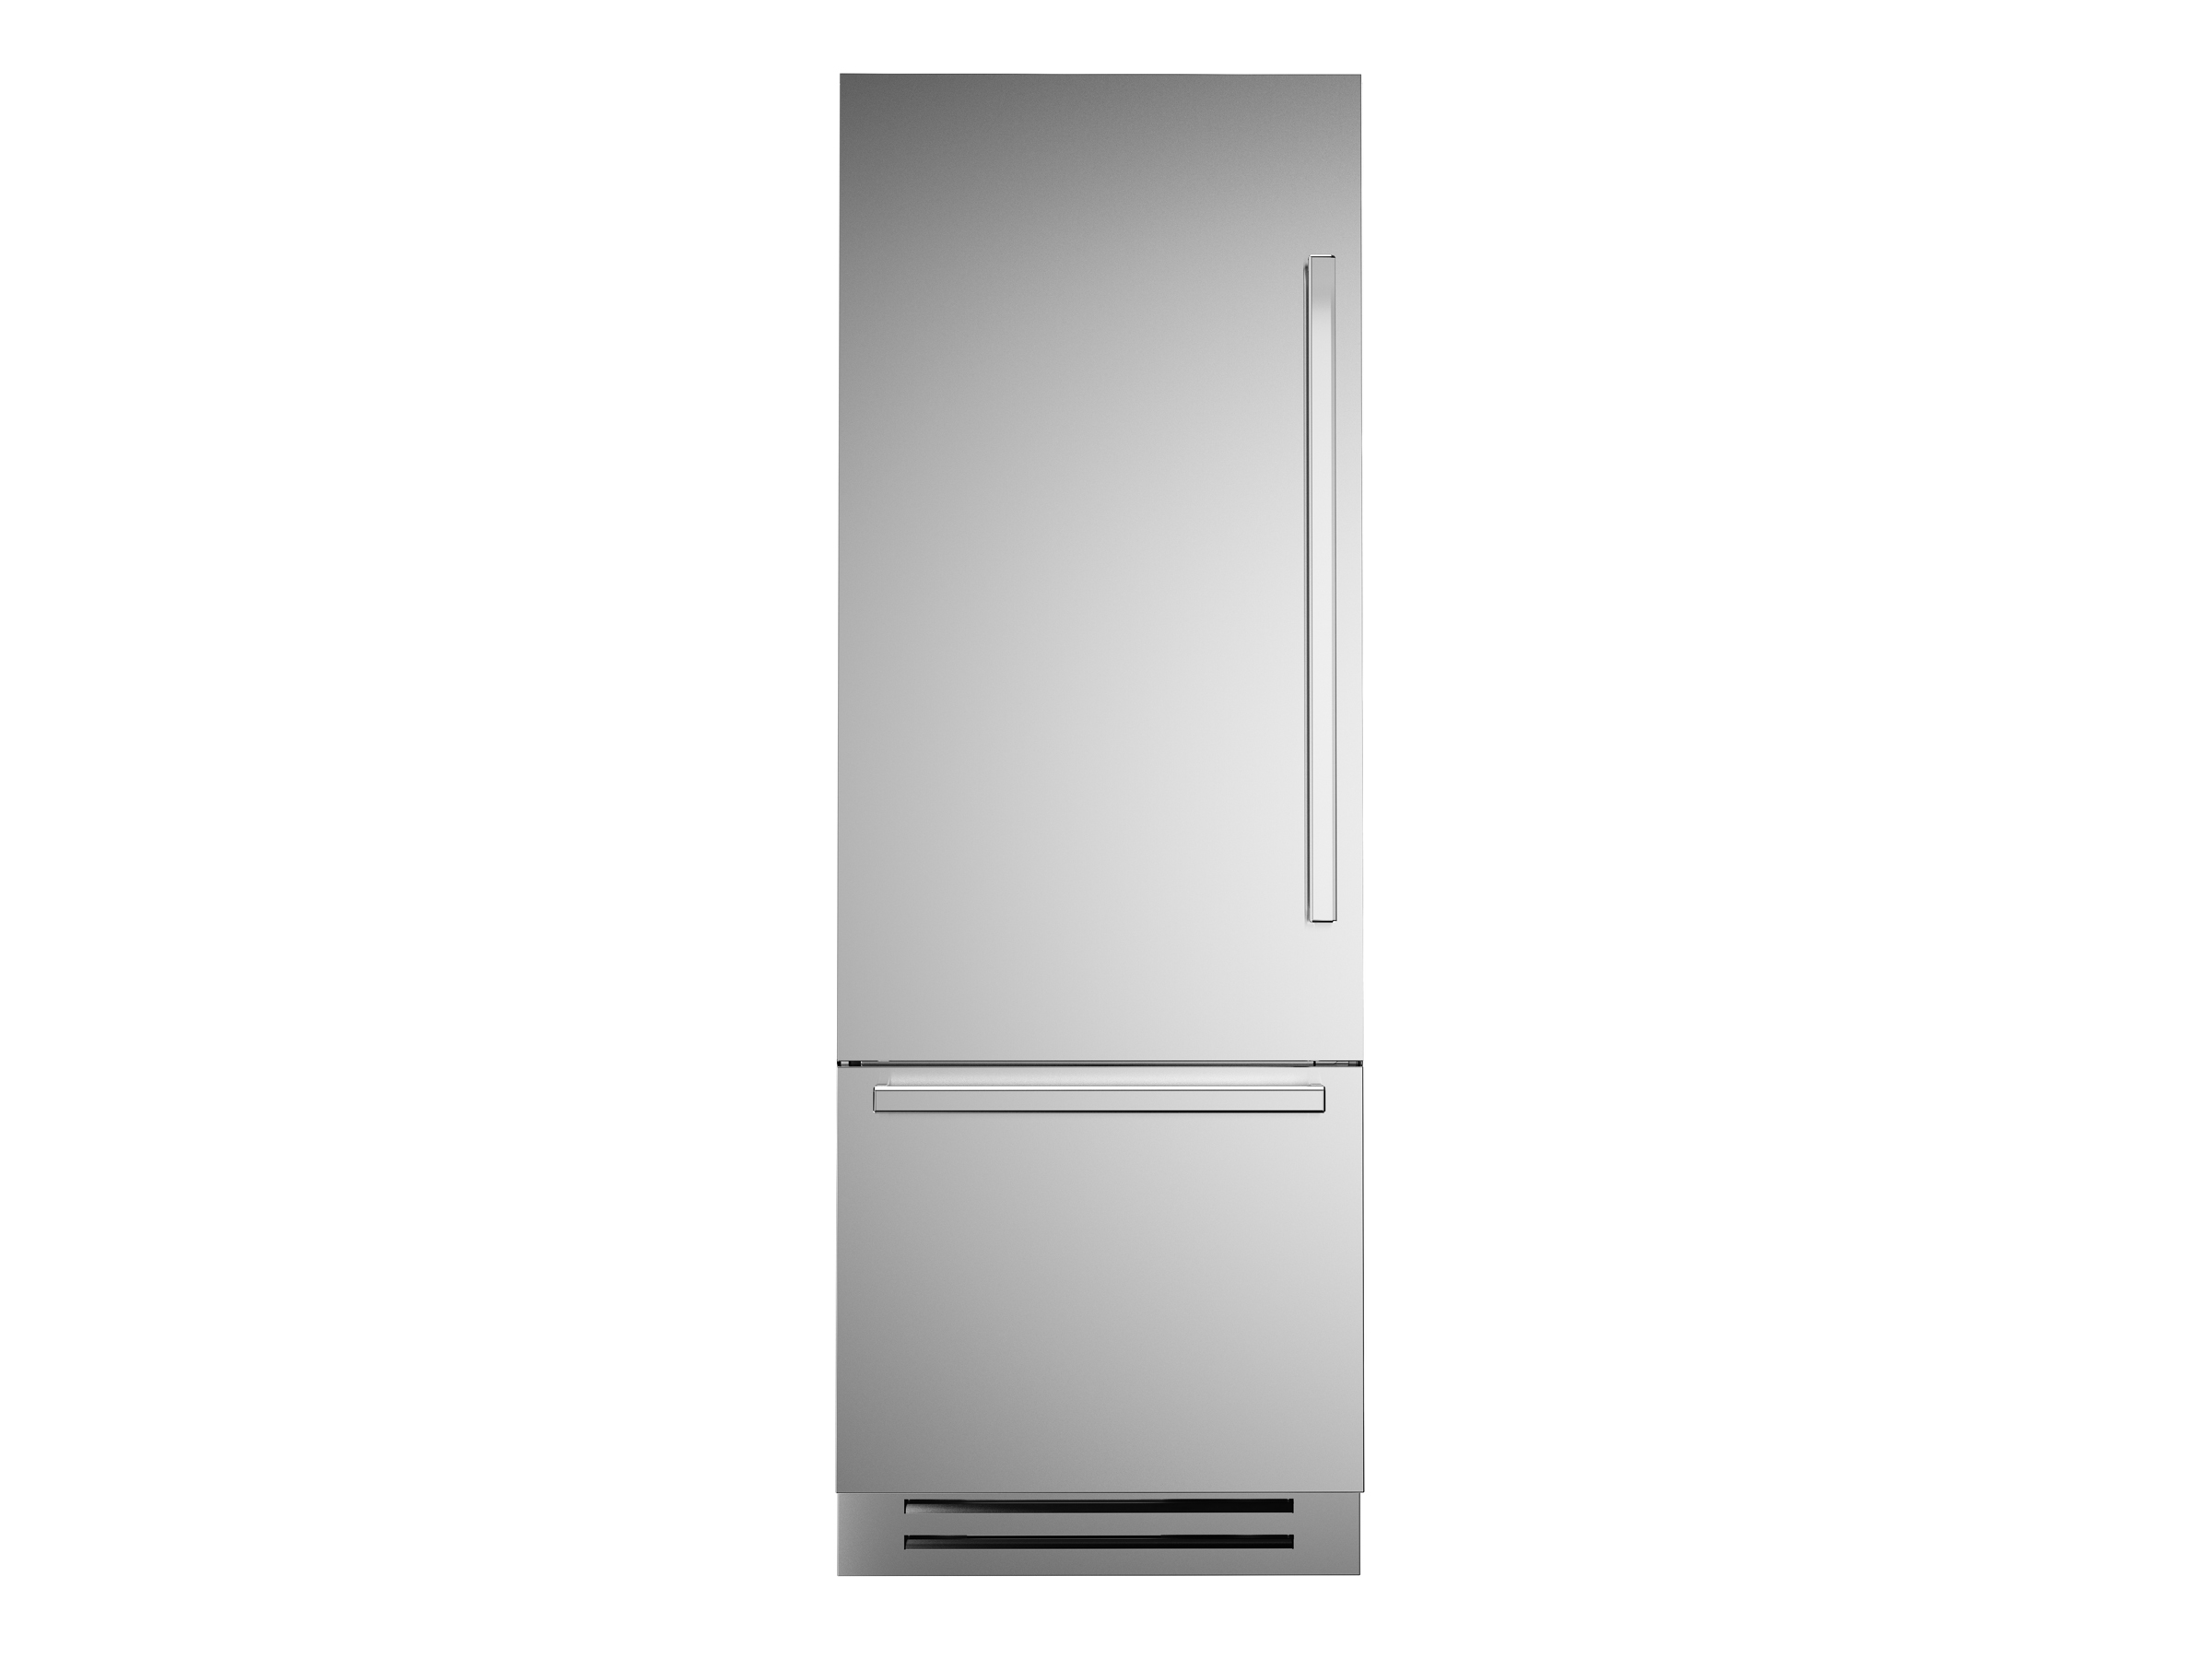 Edizione Premium frigorifero vino due zone WLB-160DF (40 - 45 bott.)